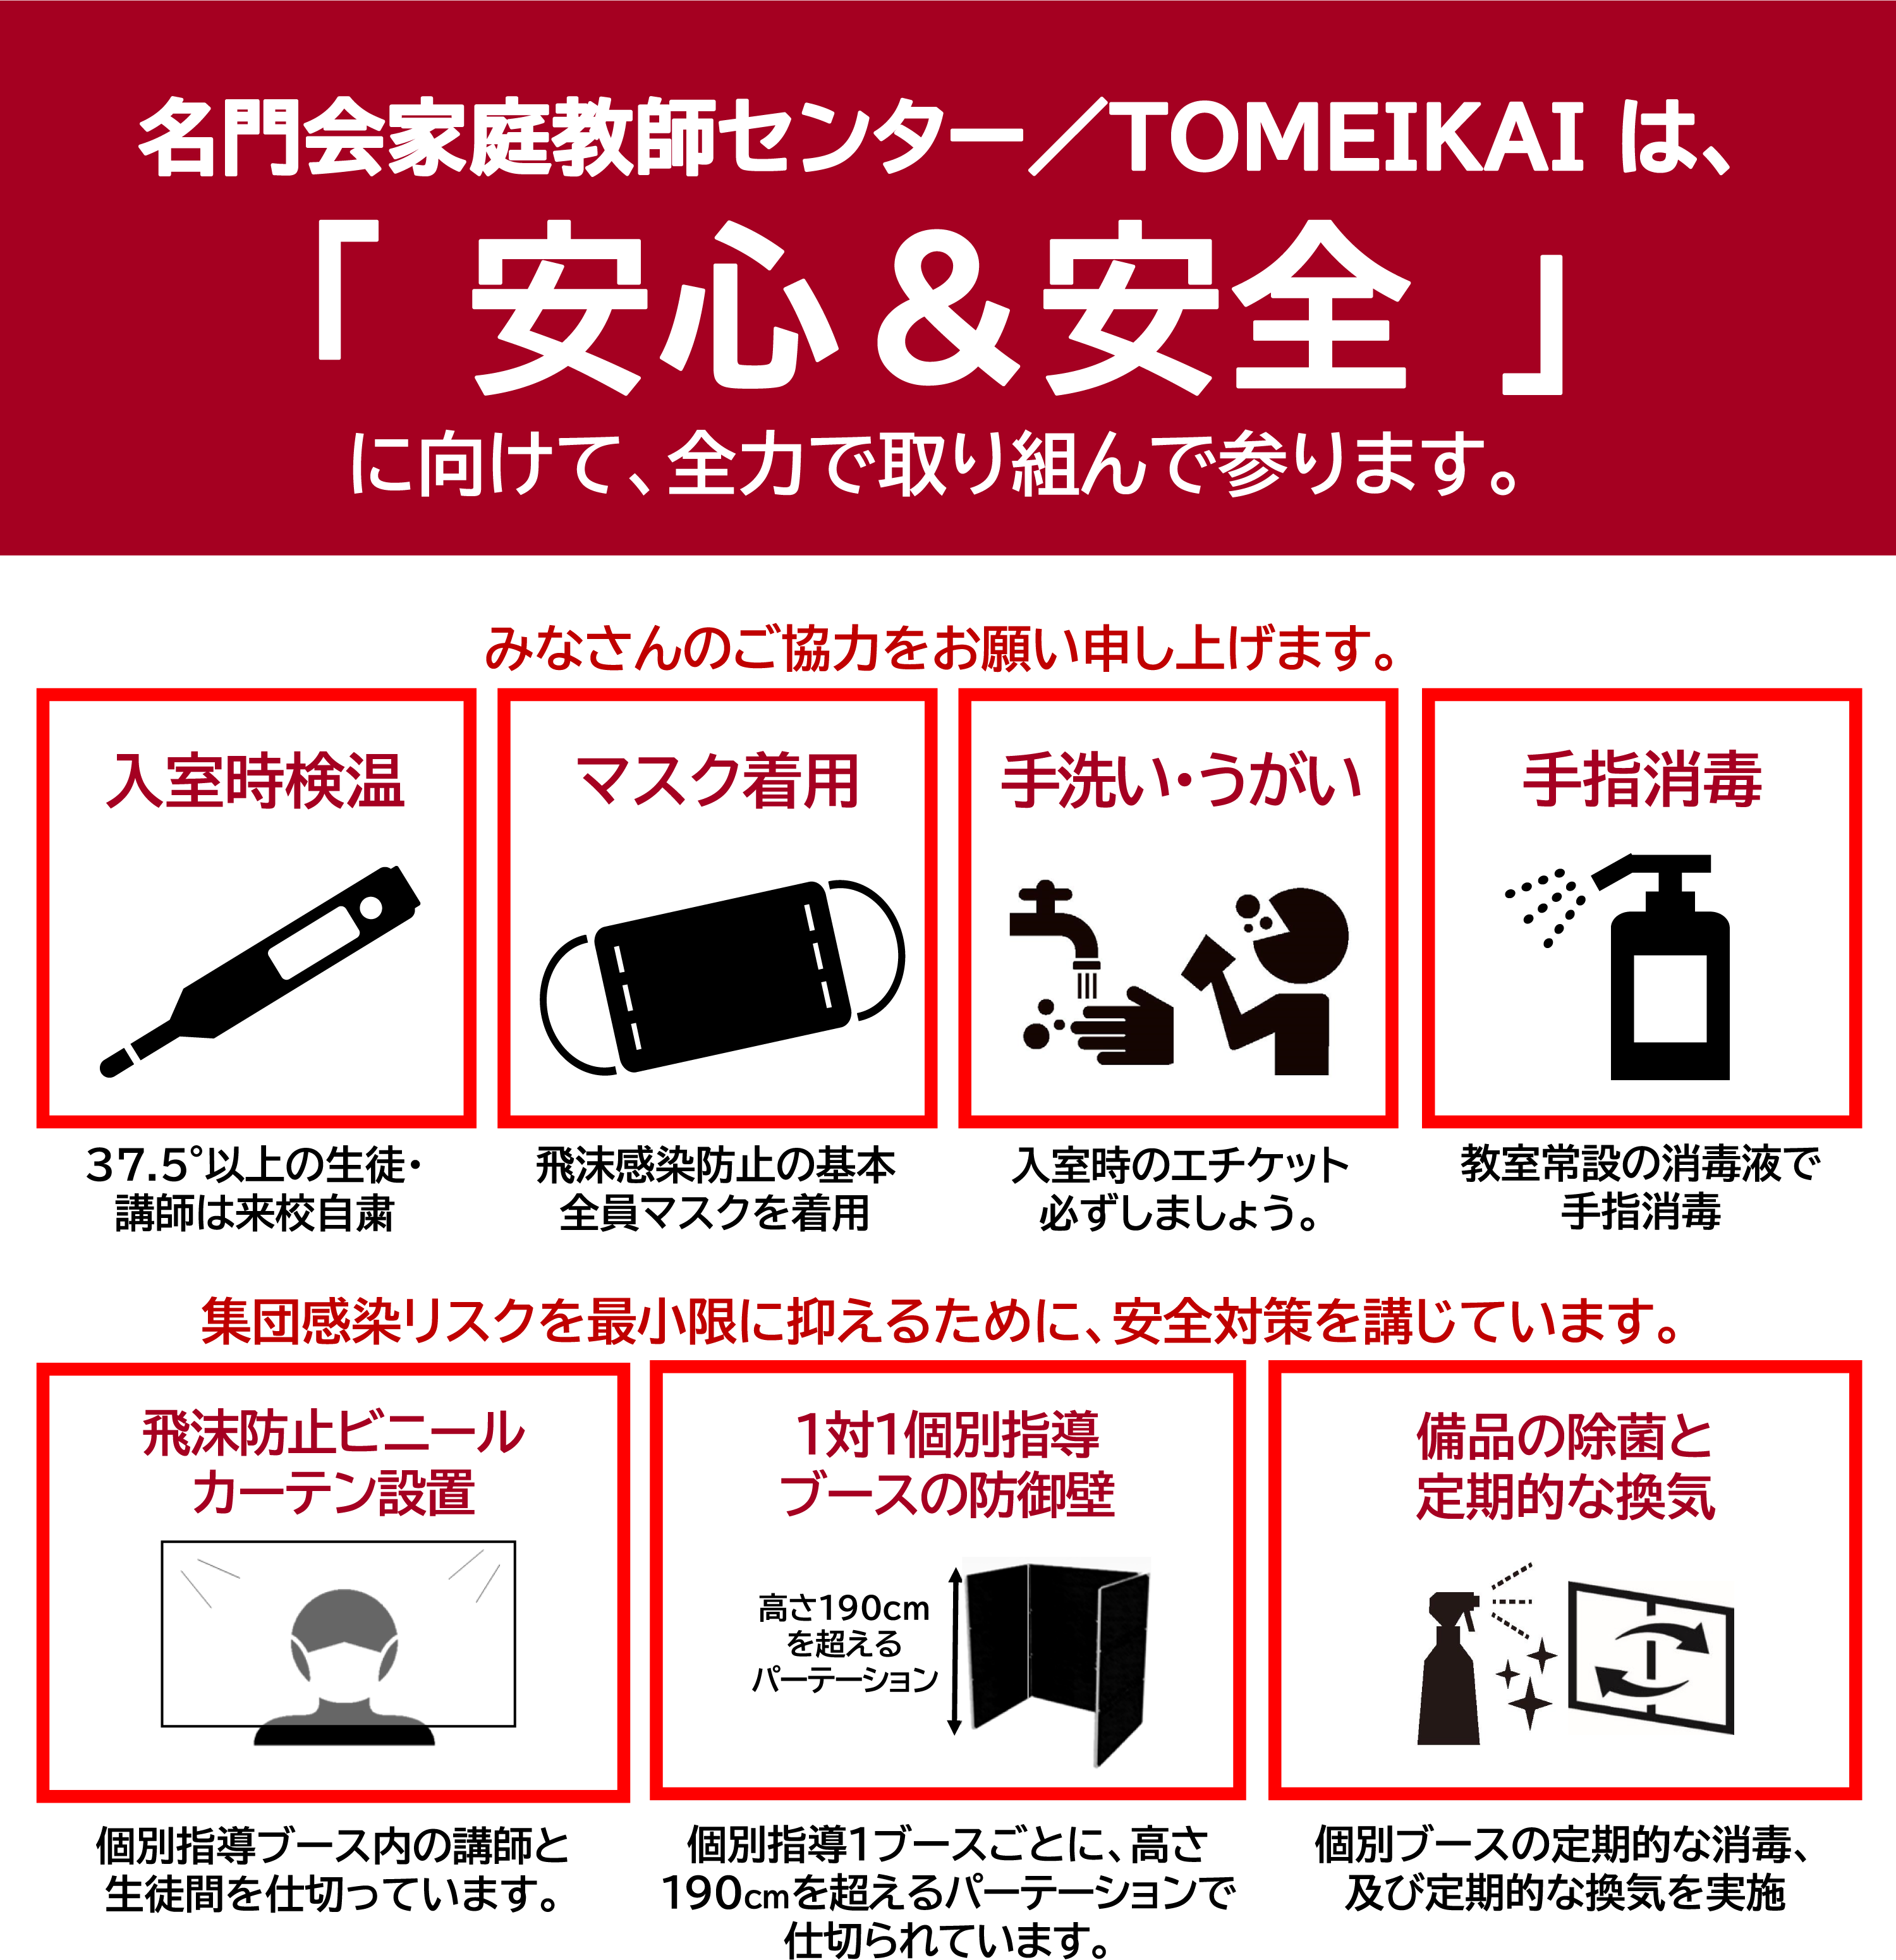 TOMEIKAIの教室は、新型コロナウイルス感染防止対策を万全に行っています